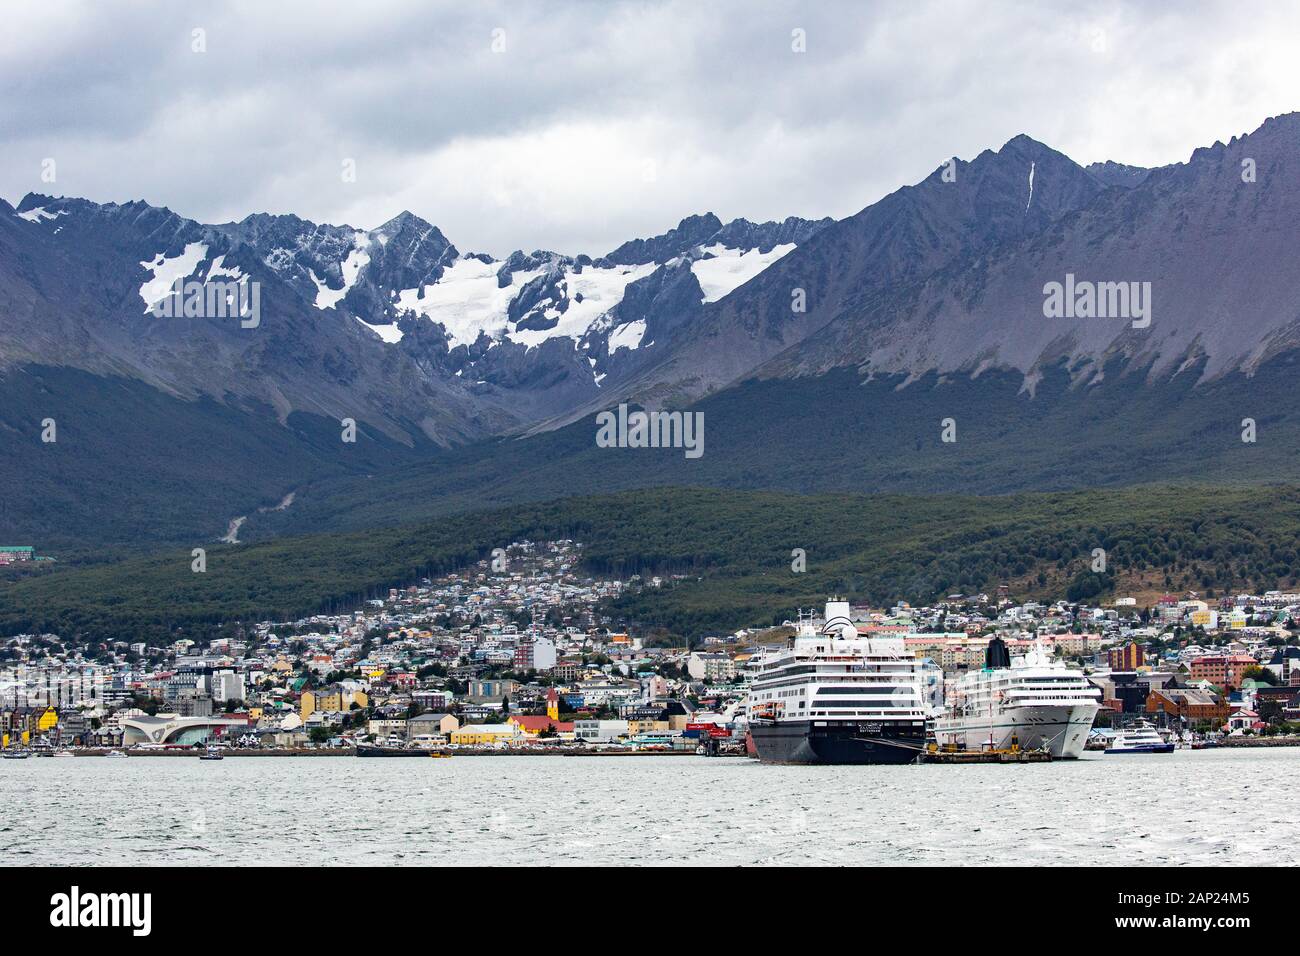 view of a cruise ship in the port of Ushuaia the capital of Tierra del Fuego, Antartida e Islas del Atlantico Sur Province, Argentina. Stock Photo